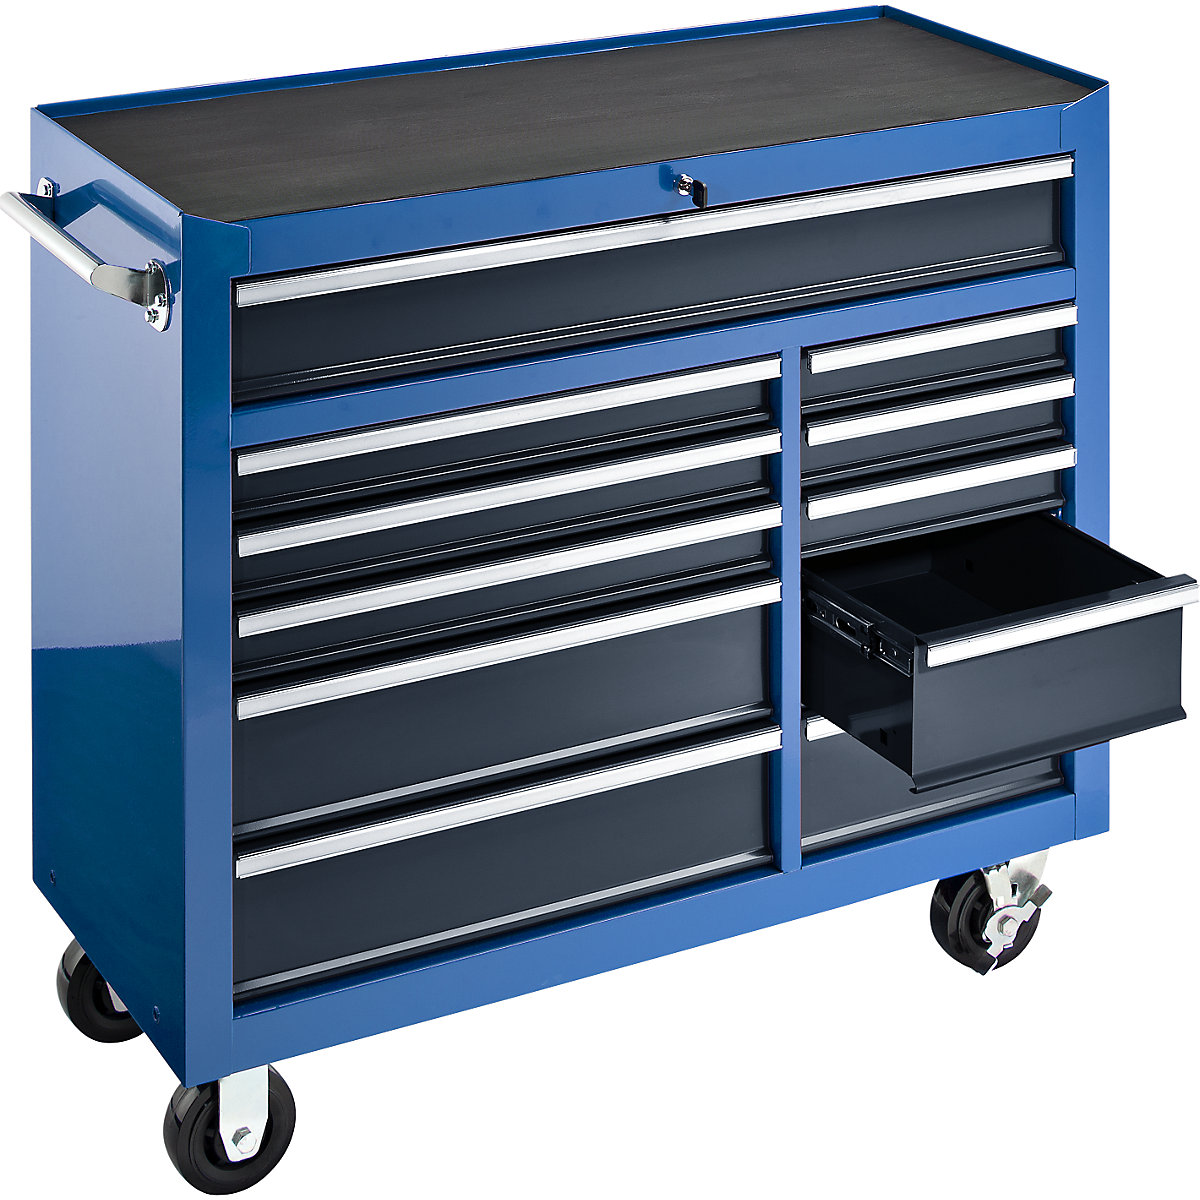 Workshop trolley: HxWxD 1007 x 1067 x 458 mm, 11 drawers